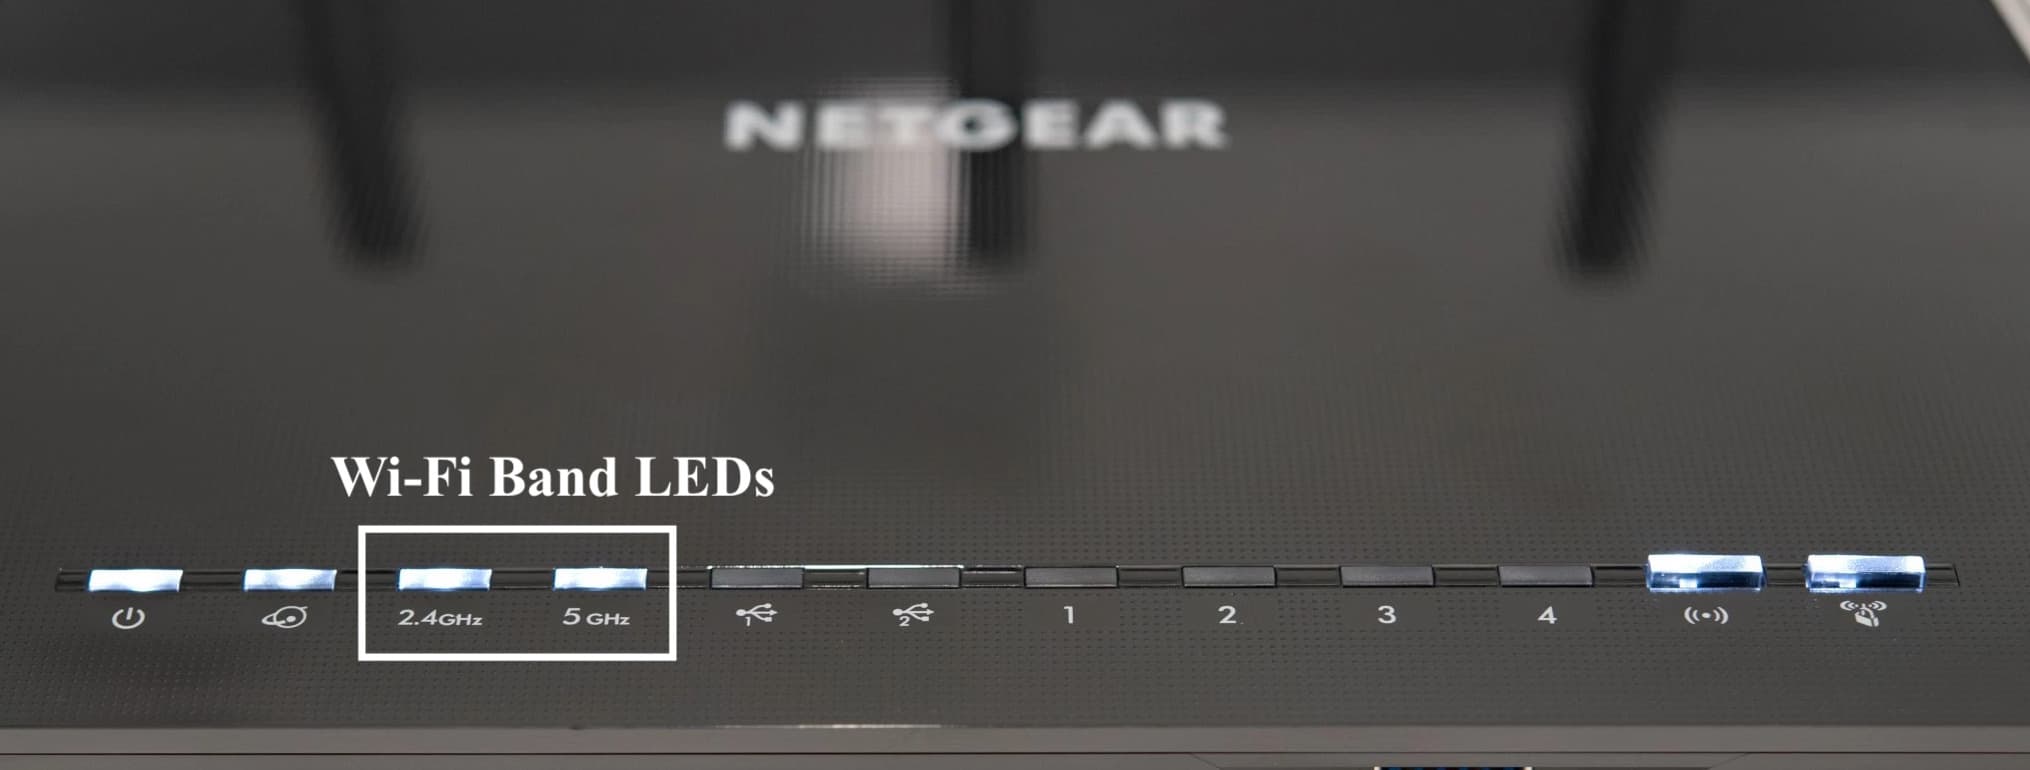 Wi-Fi Band LEDs on Netgear Router